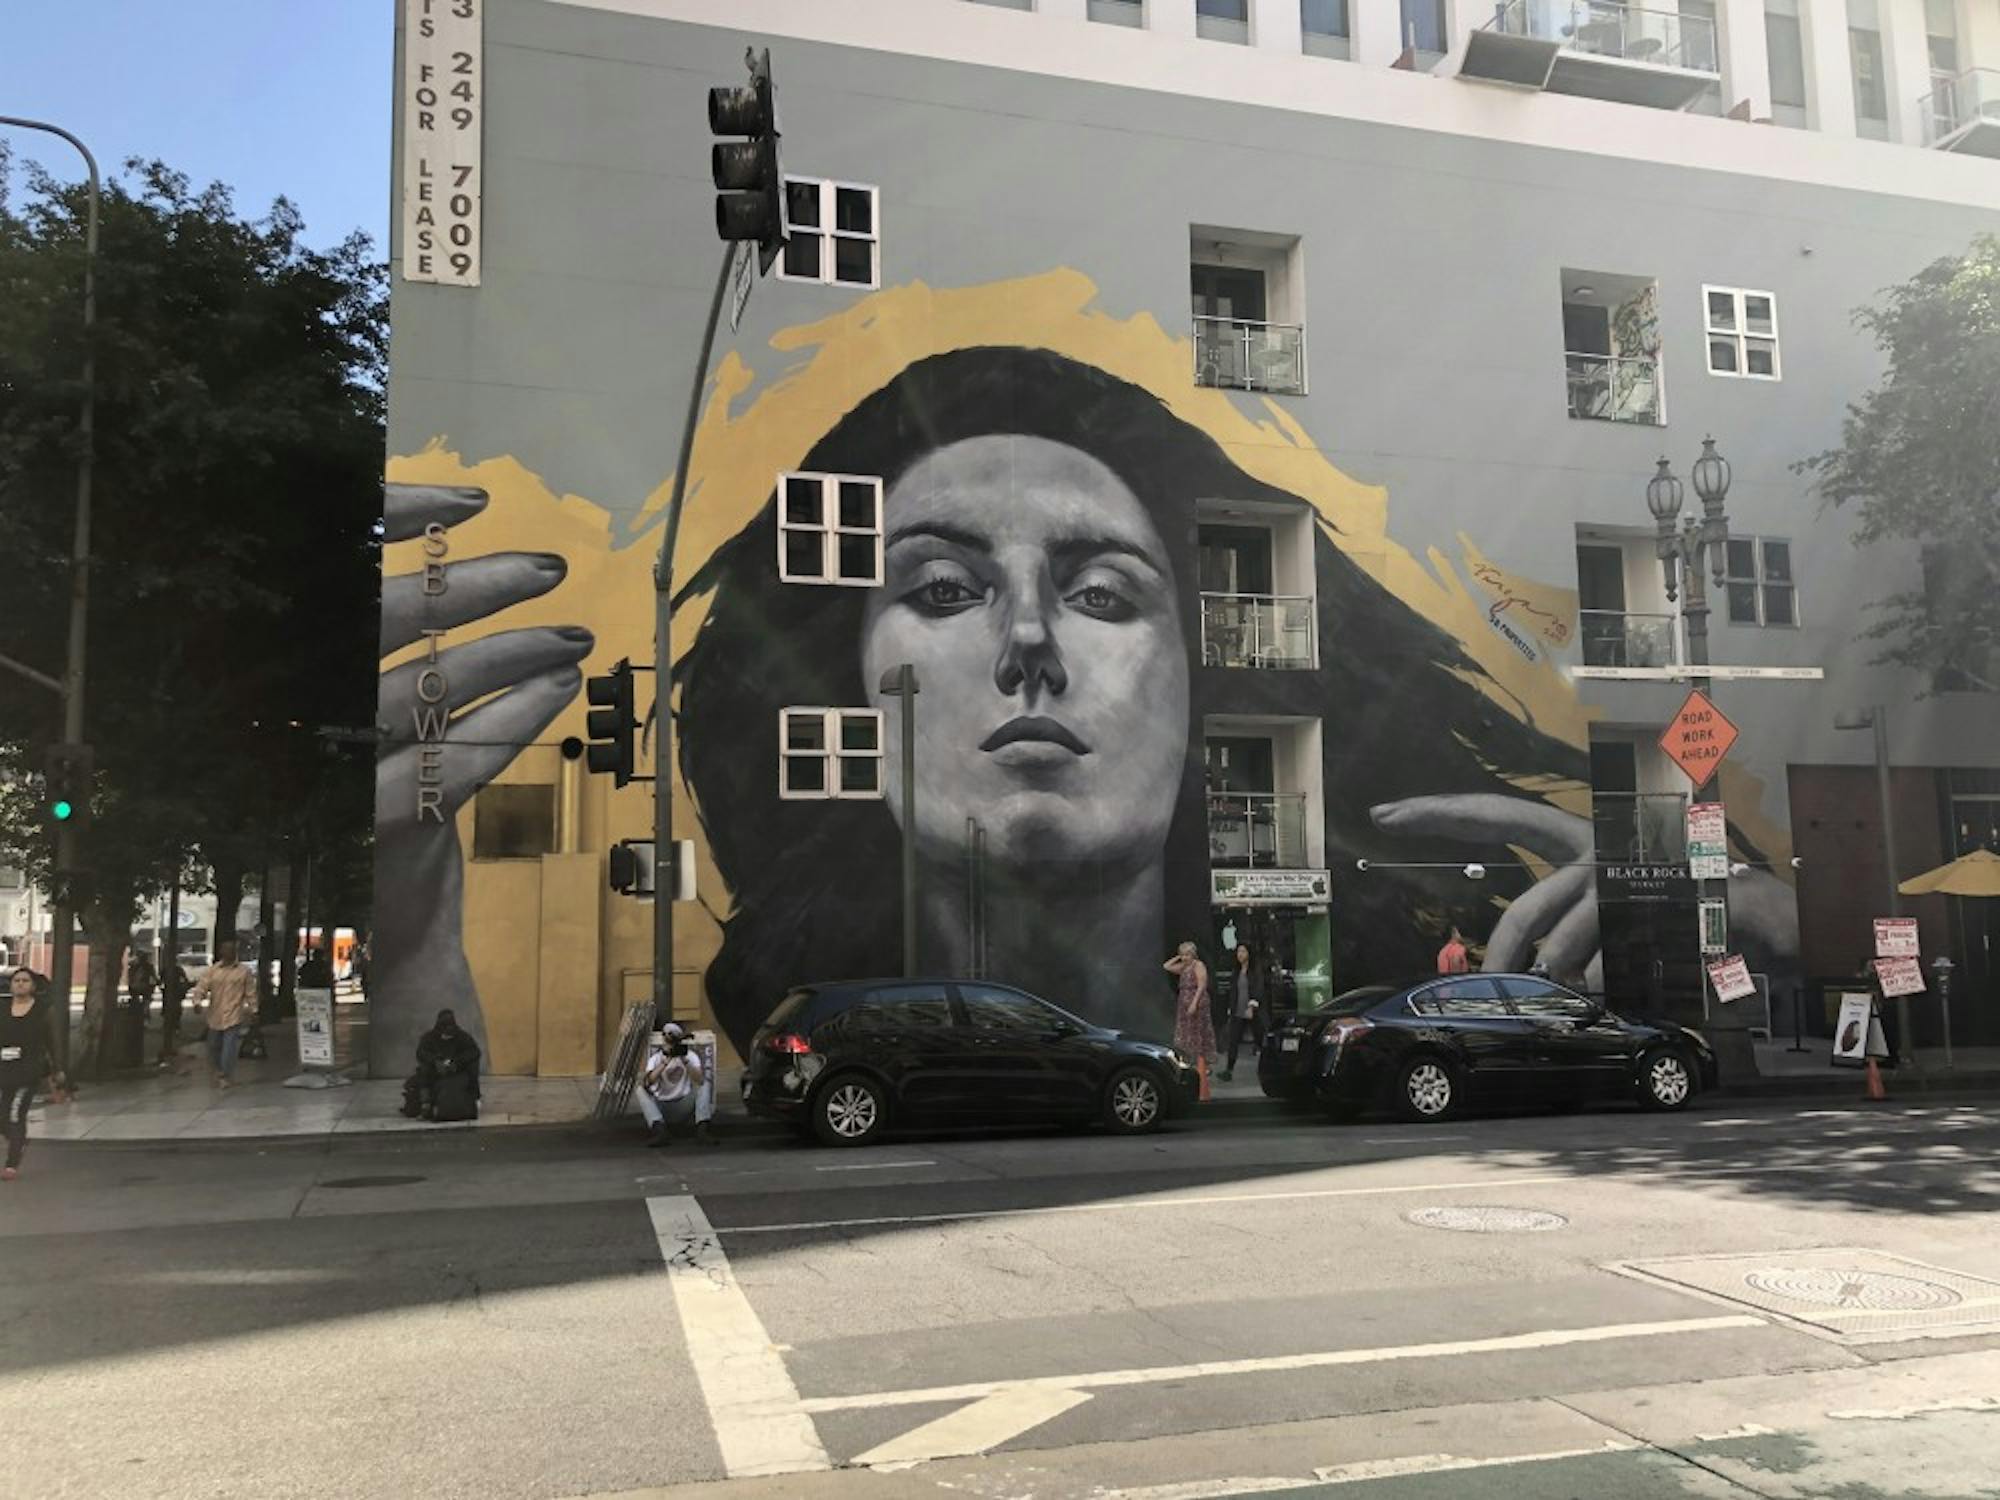 Downtown Los Angeles has striking art.